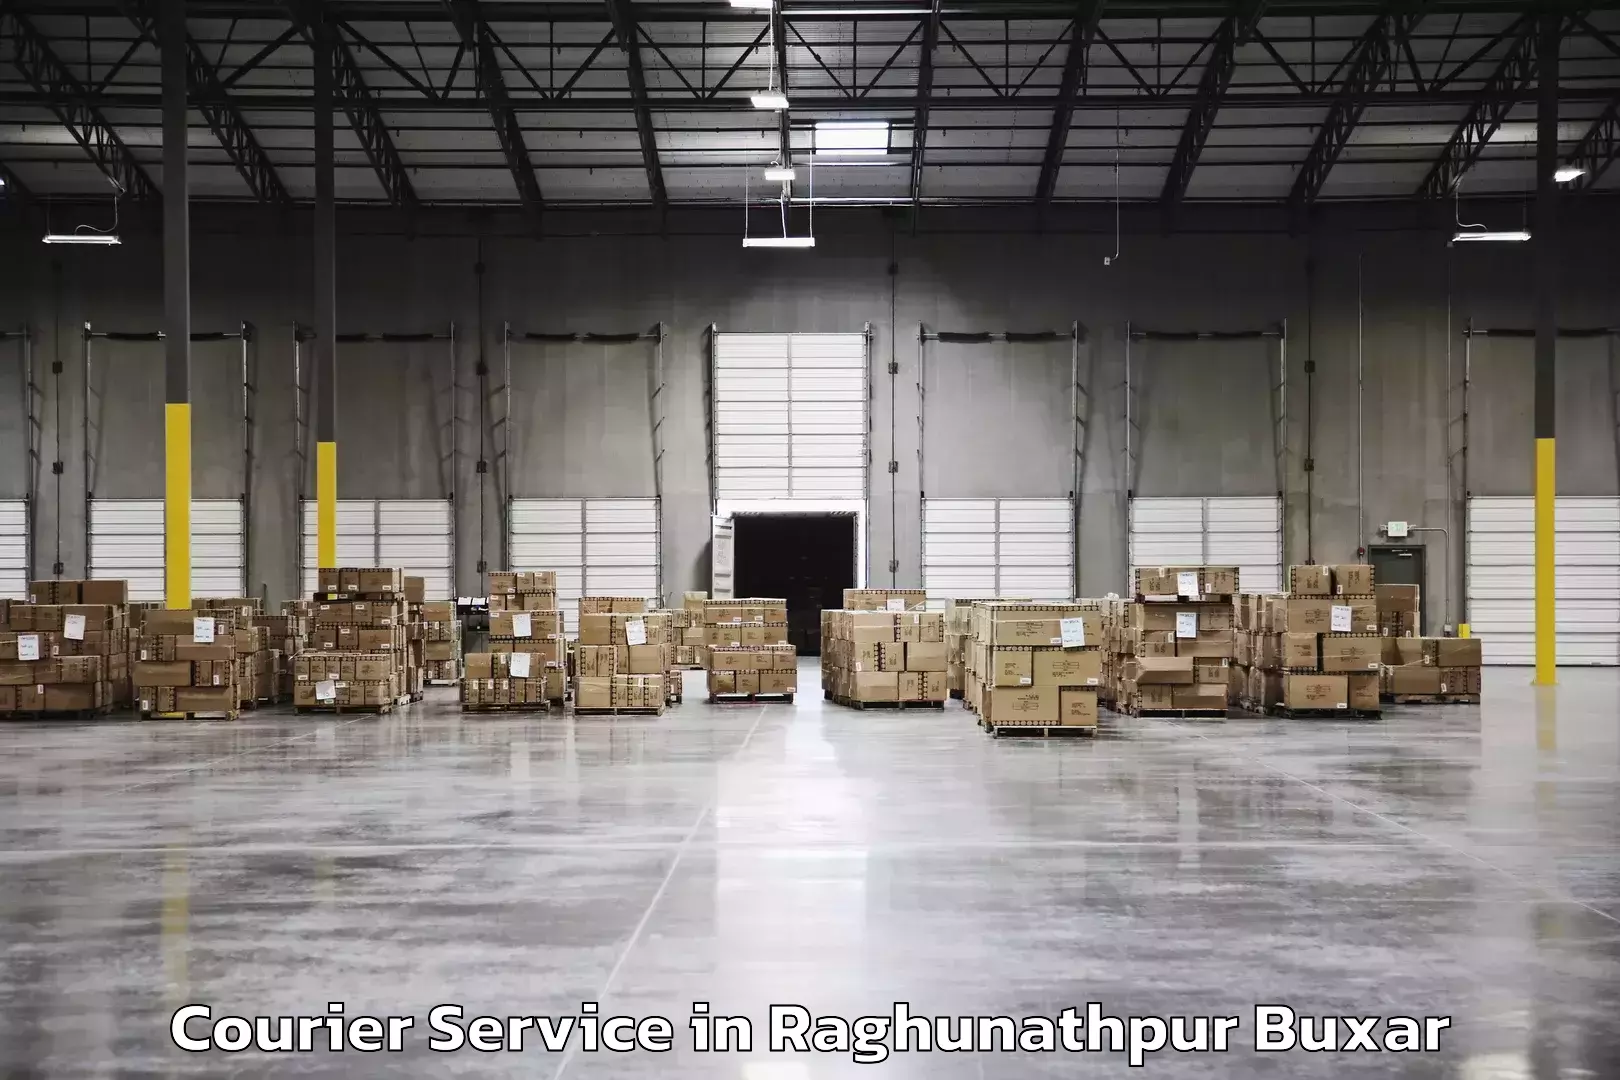 Parcel service for businesses in Raghunathpur Buxar